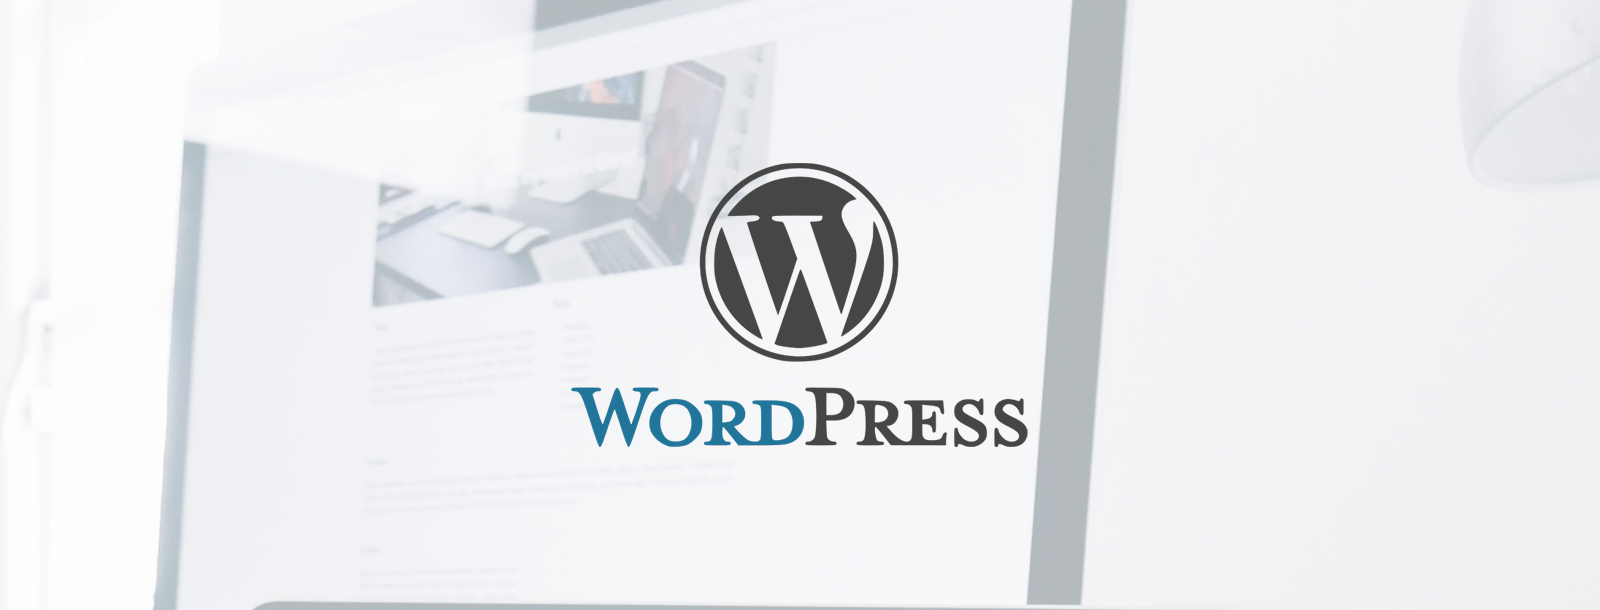 WordPress feature, Enable auto-updates